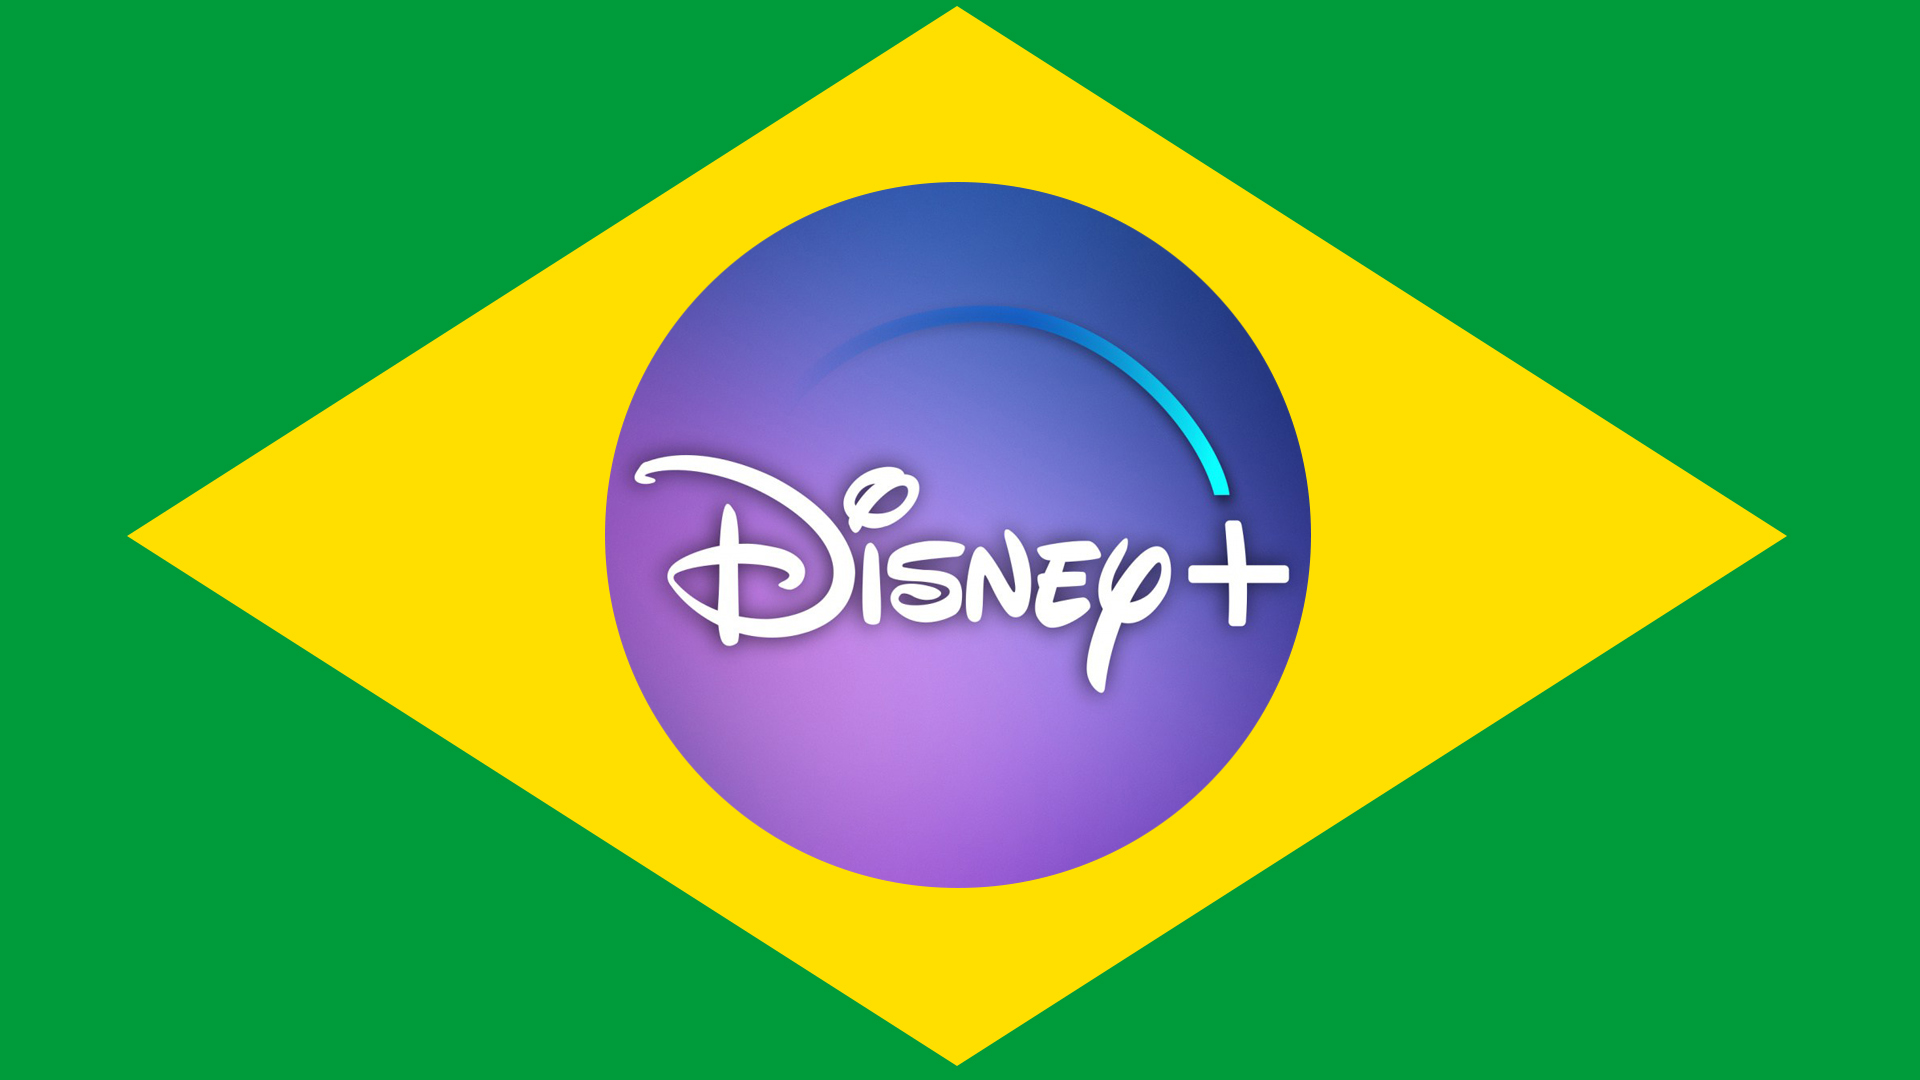 Disney + akan tiba di Brazil pada tahun 2020
